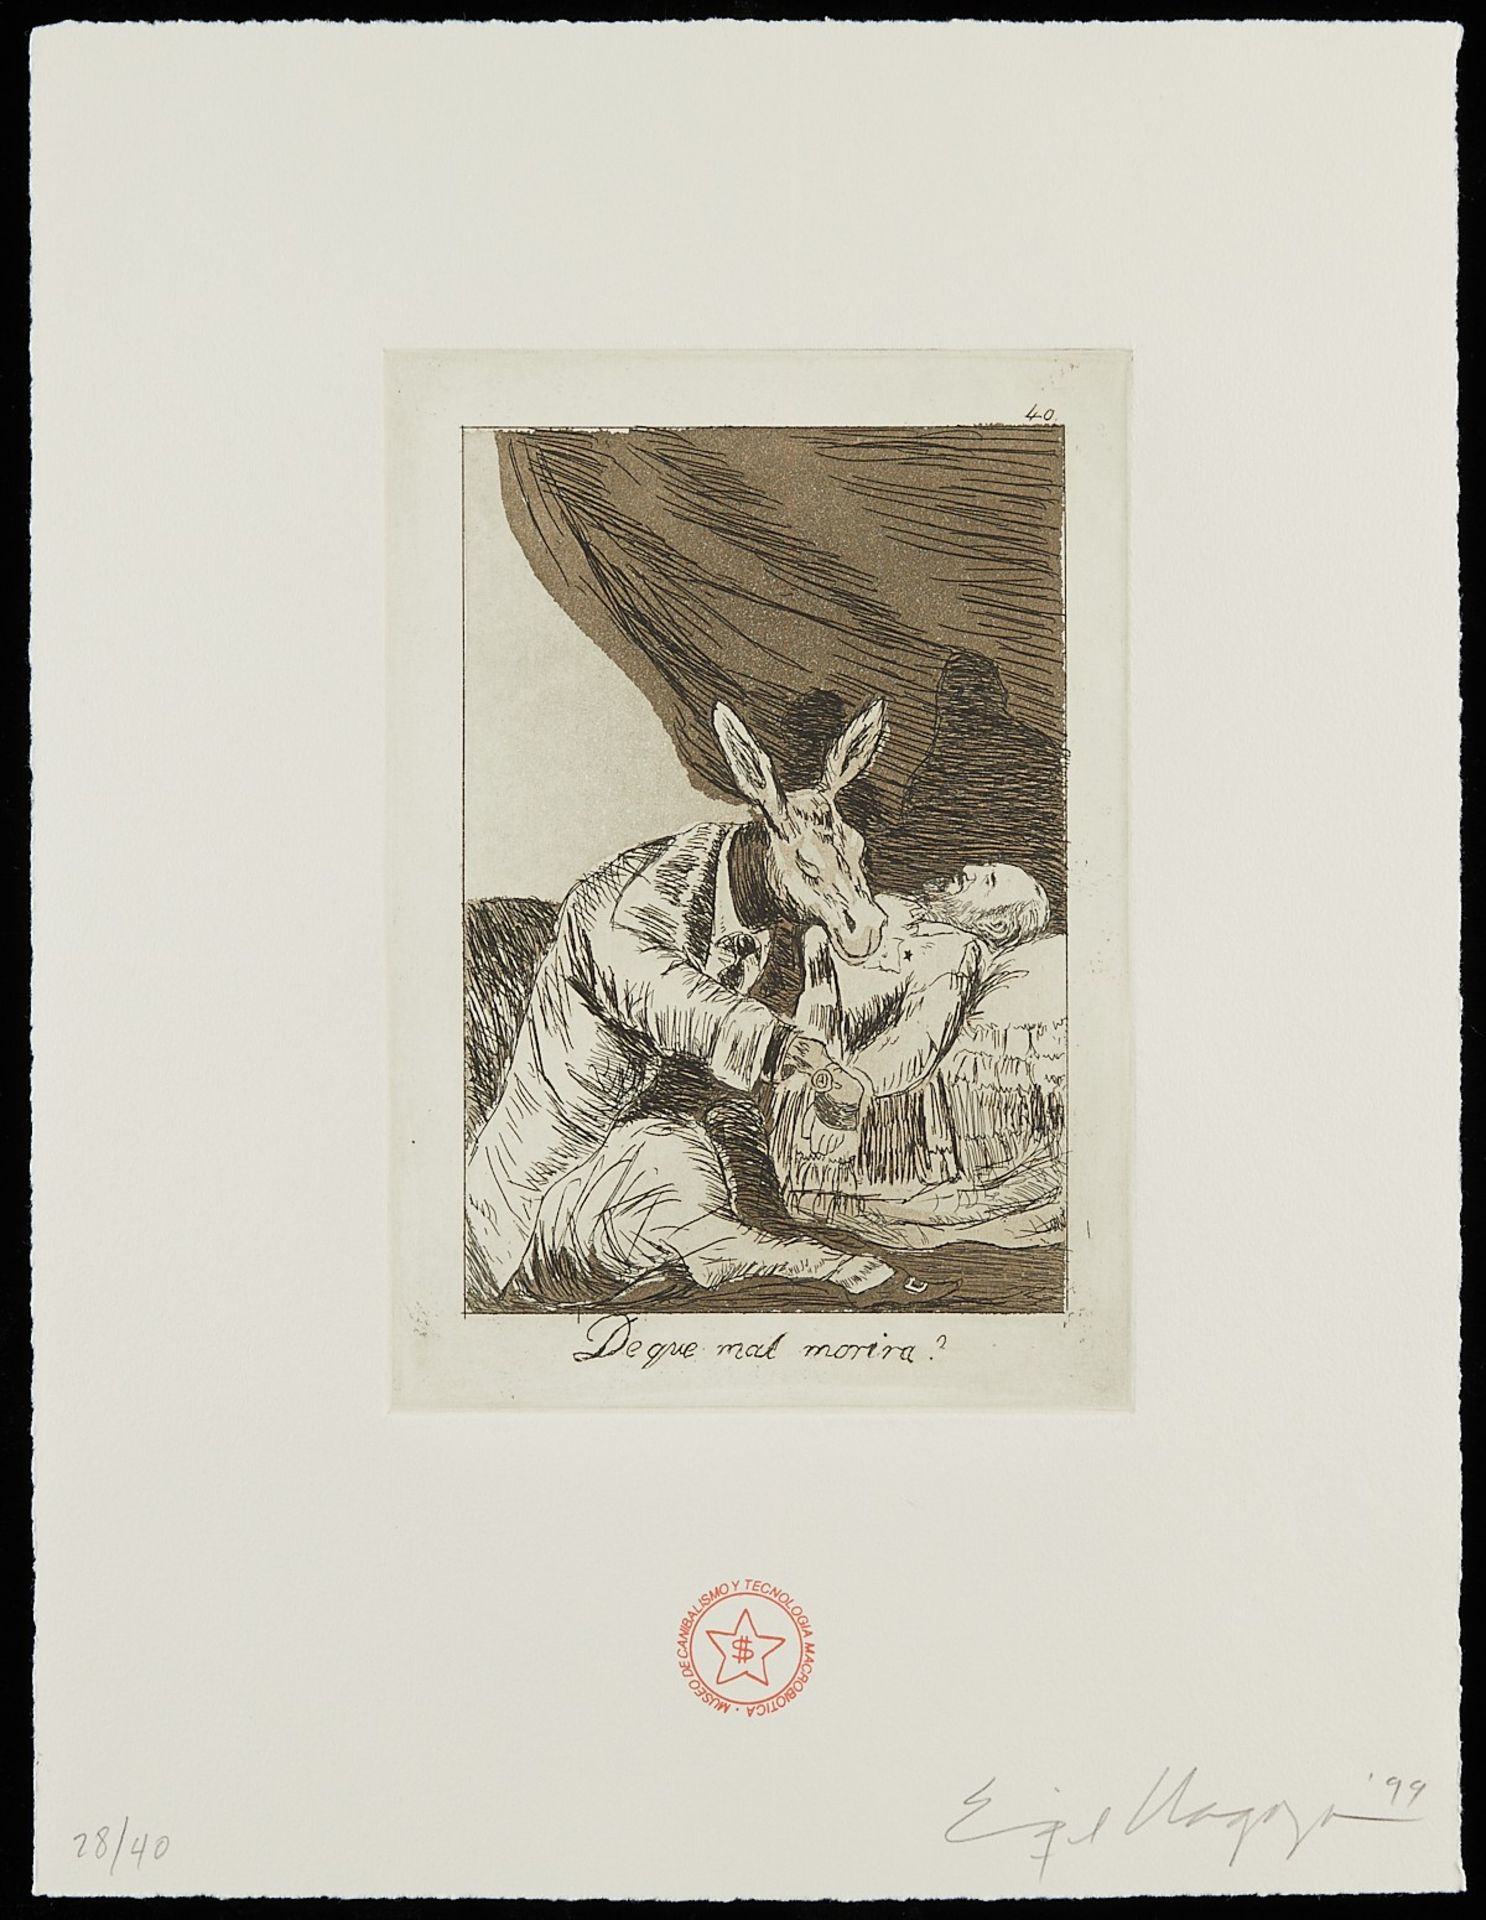 Grp: 8 Chagoya "Return To Goya's Caprichos" Suite - Image 23 of 40